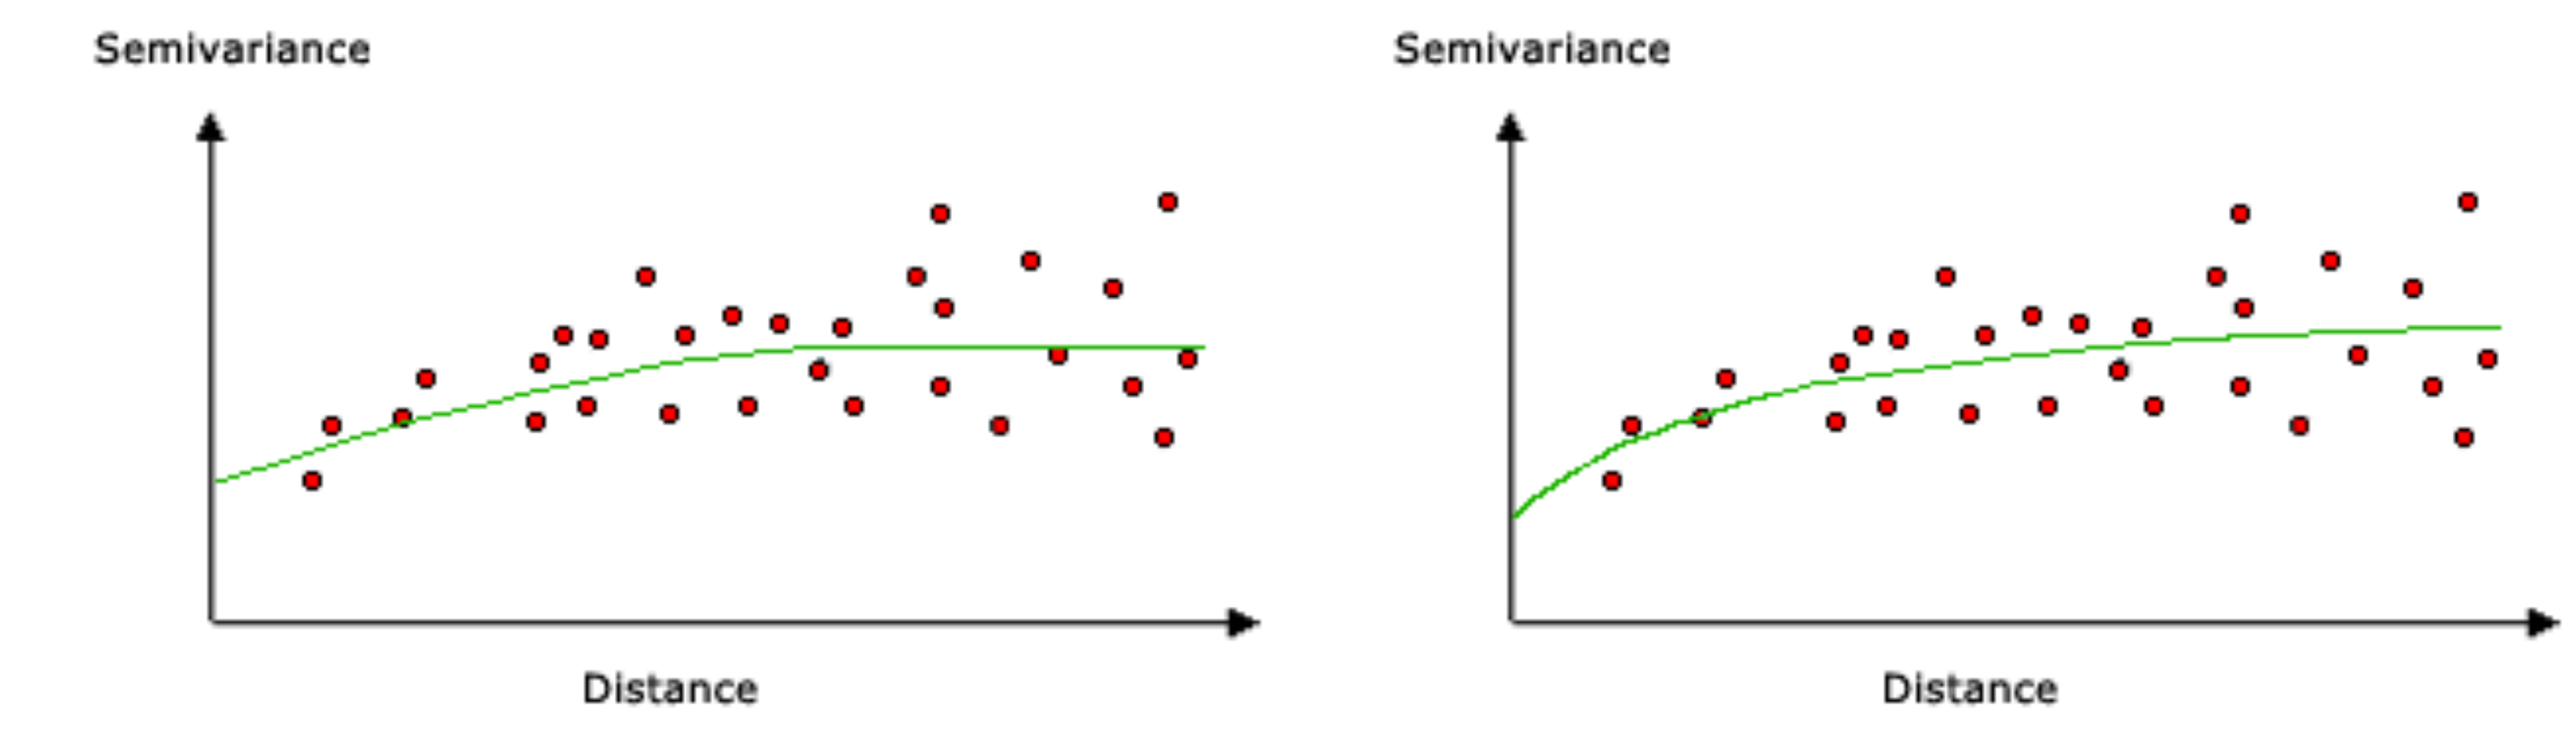 Variogram models: spherical (left) and exponential (right) (http://desktop.arcgis.com/en/arcmap/10.3/tools/spatial-analyst-toolbox/how-kriging-works.htm)